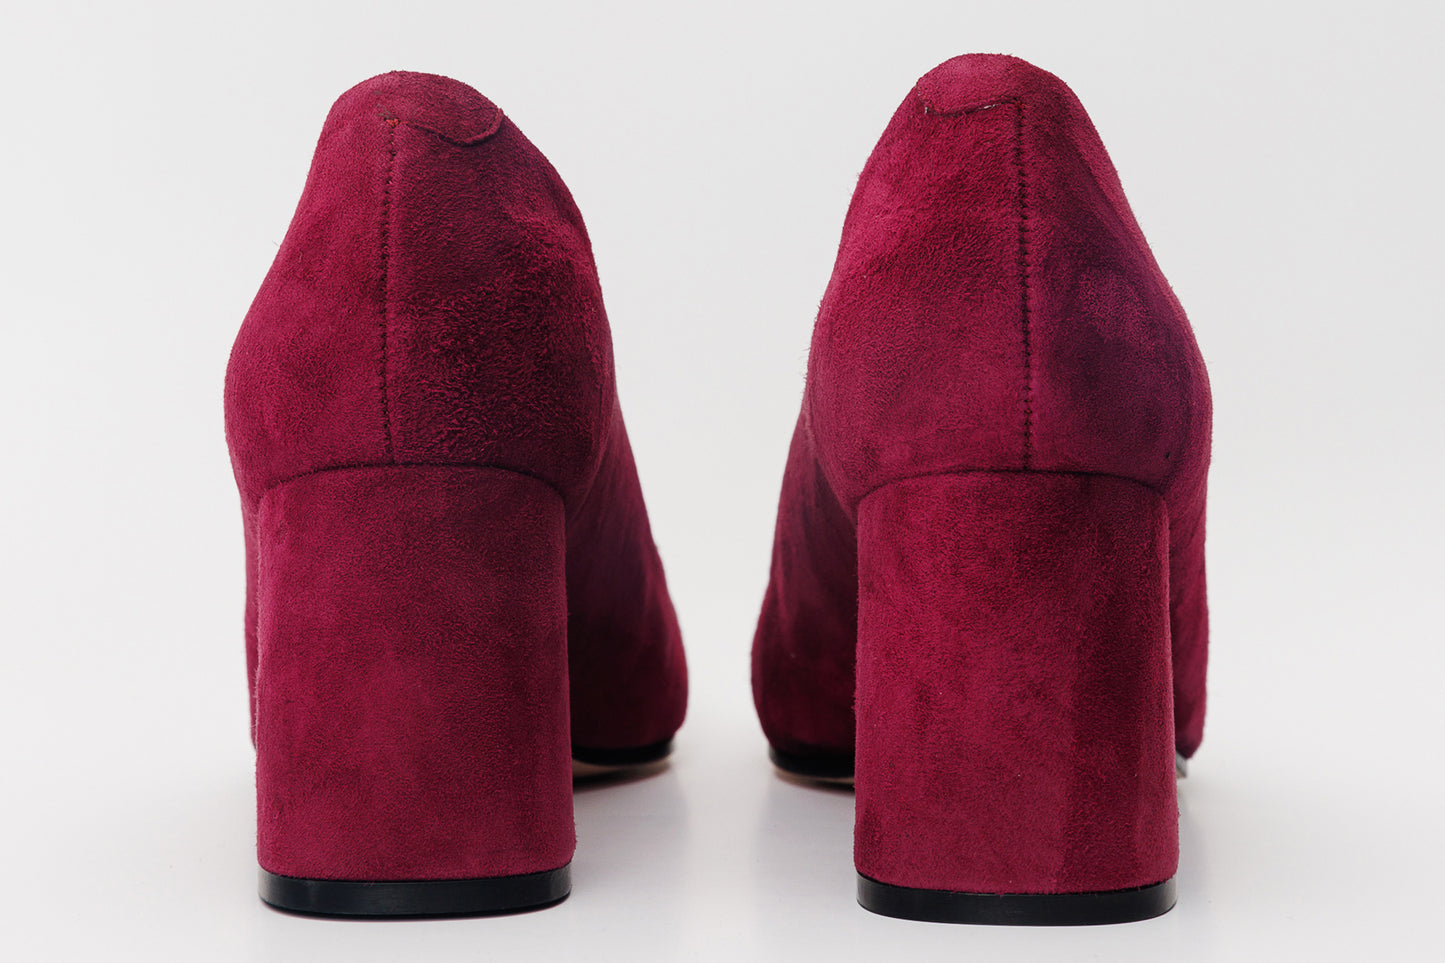 The California Burgundy Suede Leather Block Heel Pump Women Shoe